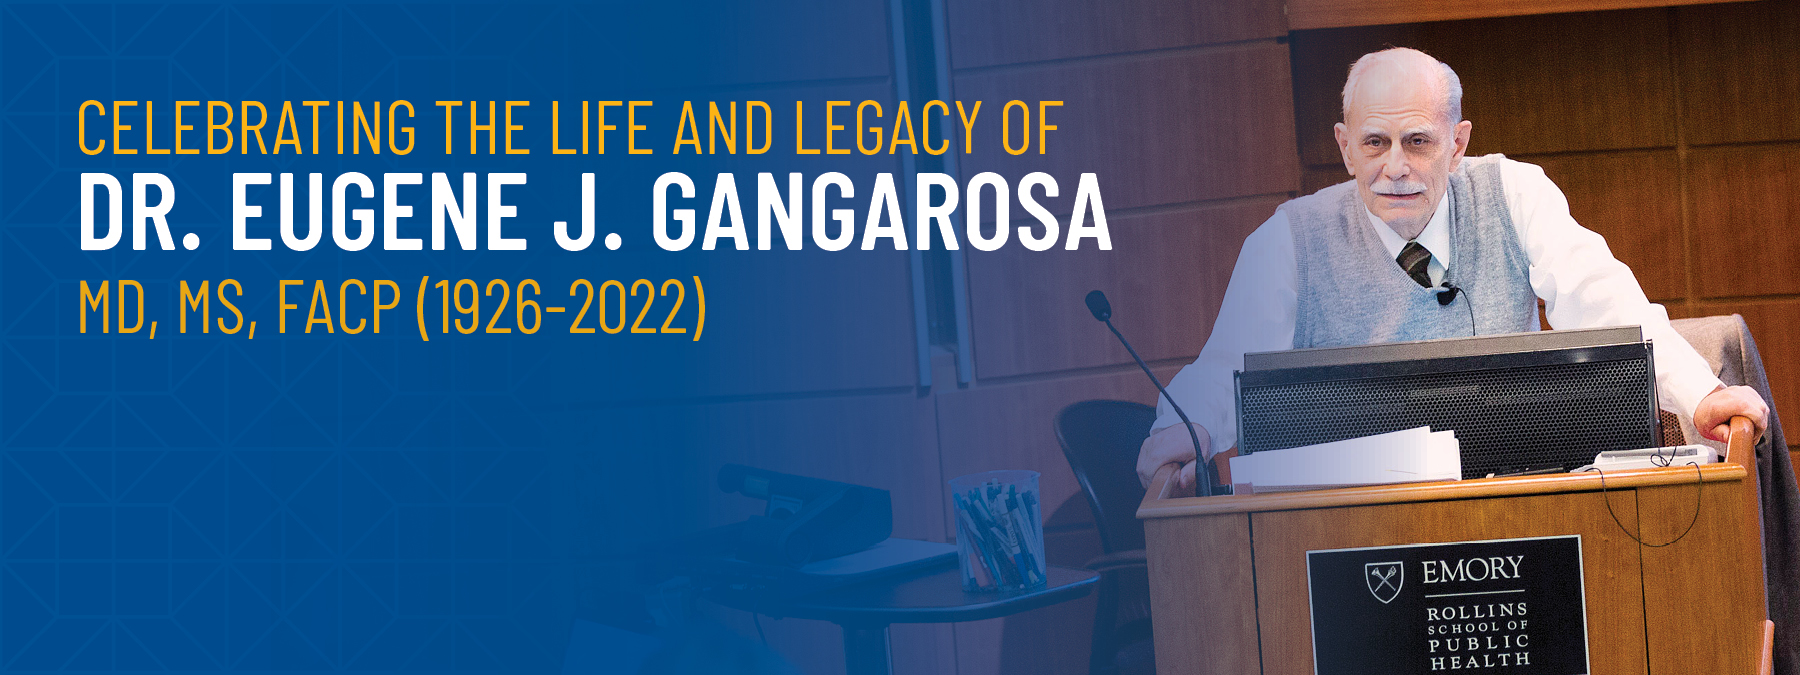 Gangarosa Legacy image